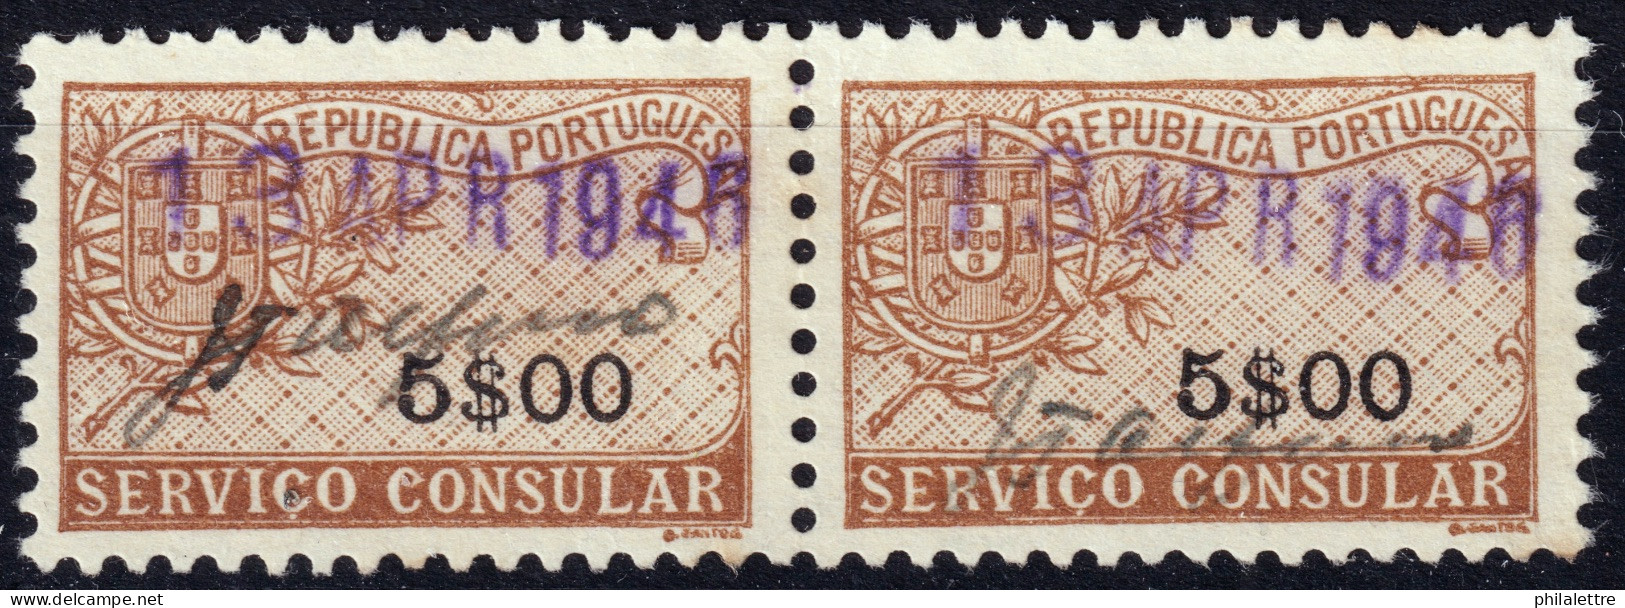 PORTUGAL - 1946 Pair Of 5.00esc. "SERVICIO CONSULAR" Fiscal Revenue Stamp - Very Fine Used - Oblitérés